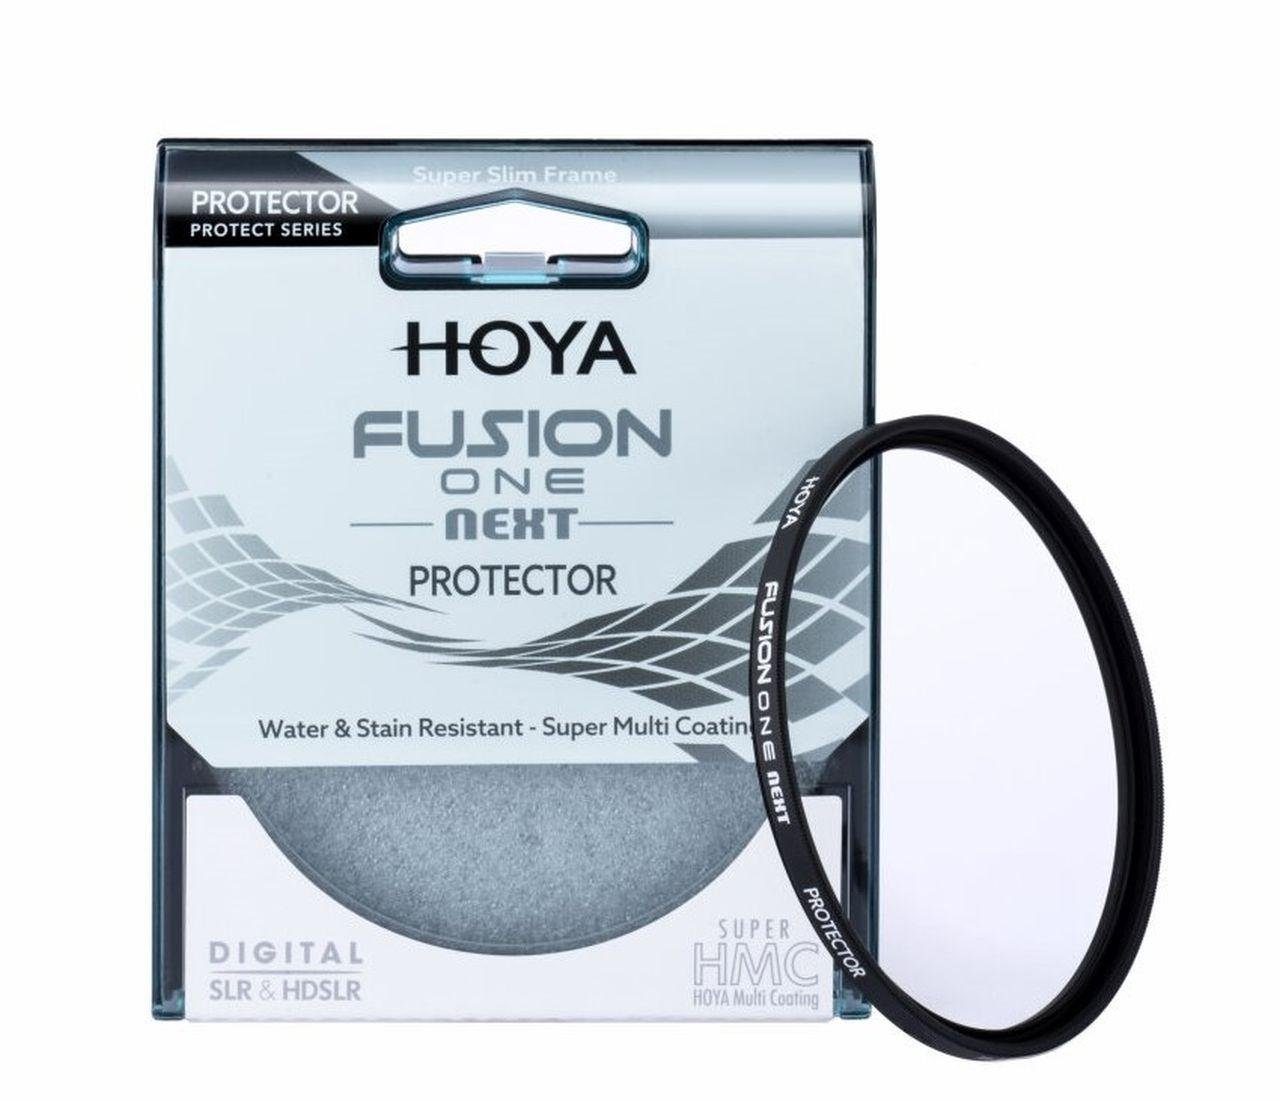 Hoya Fusion ONE Next Protector 67mm Objektivzubehör